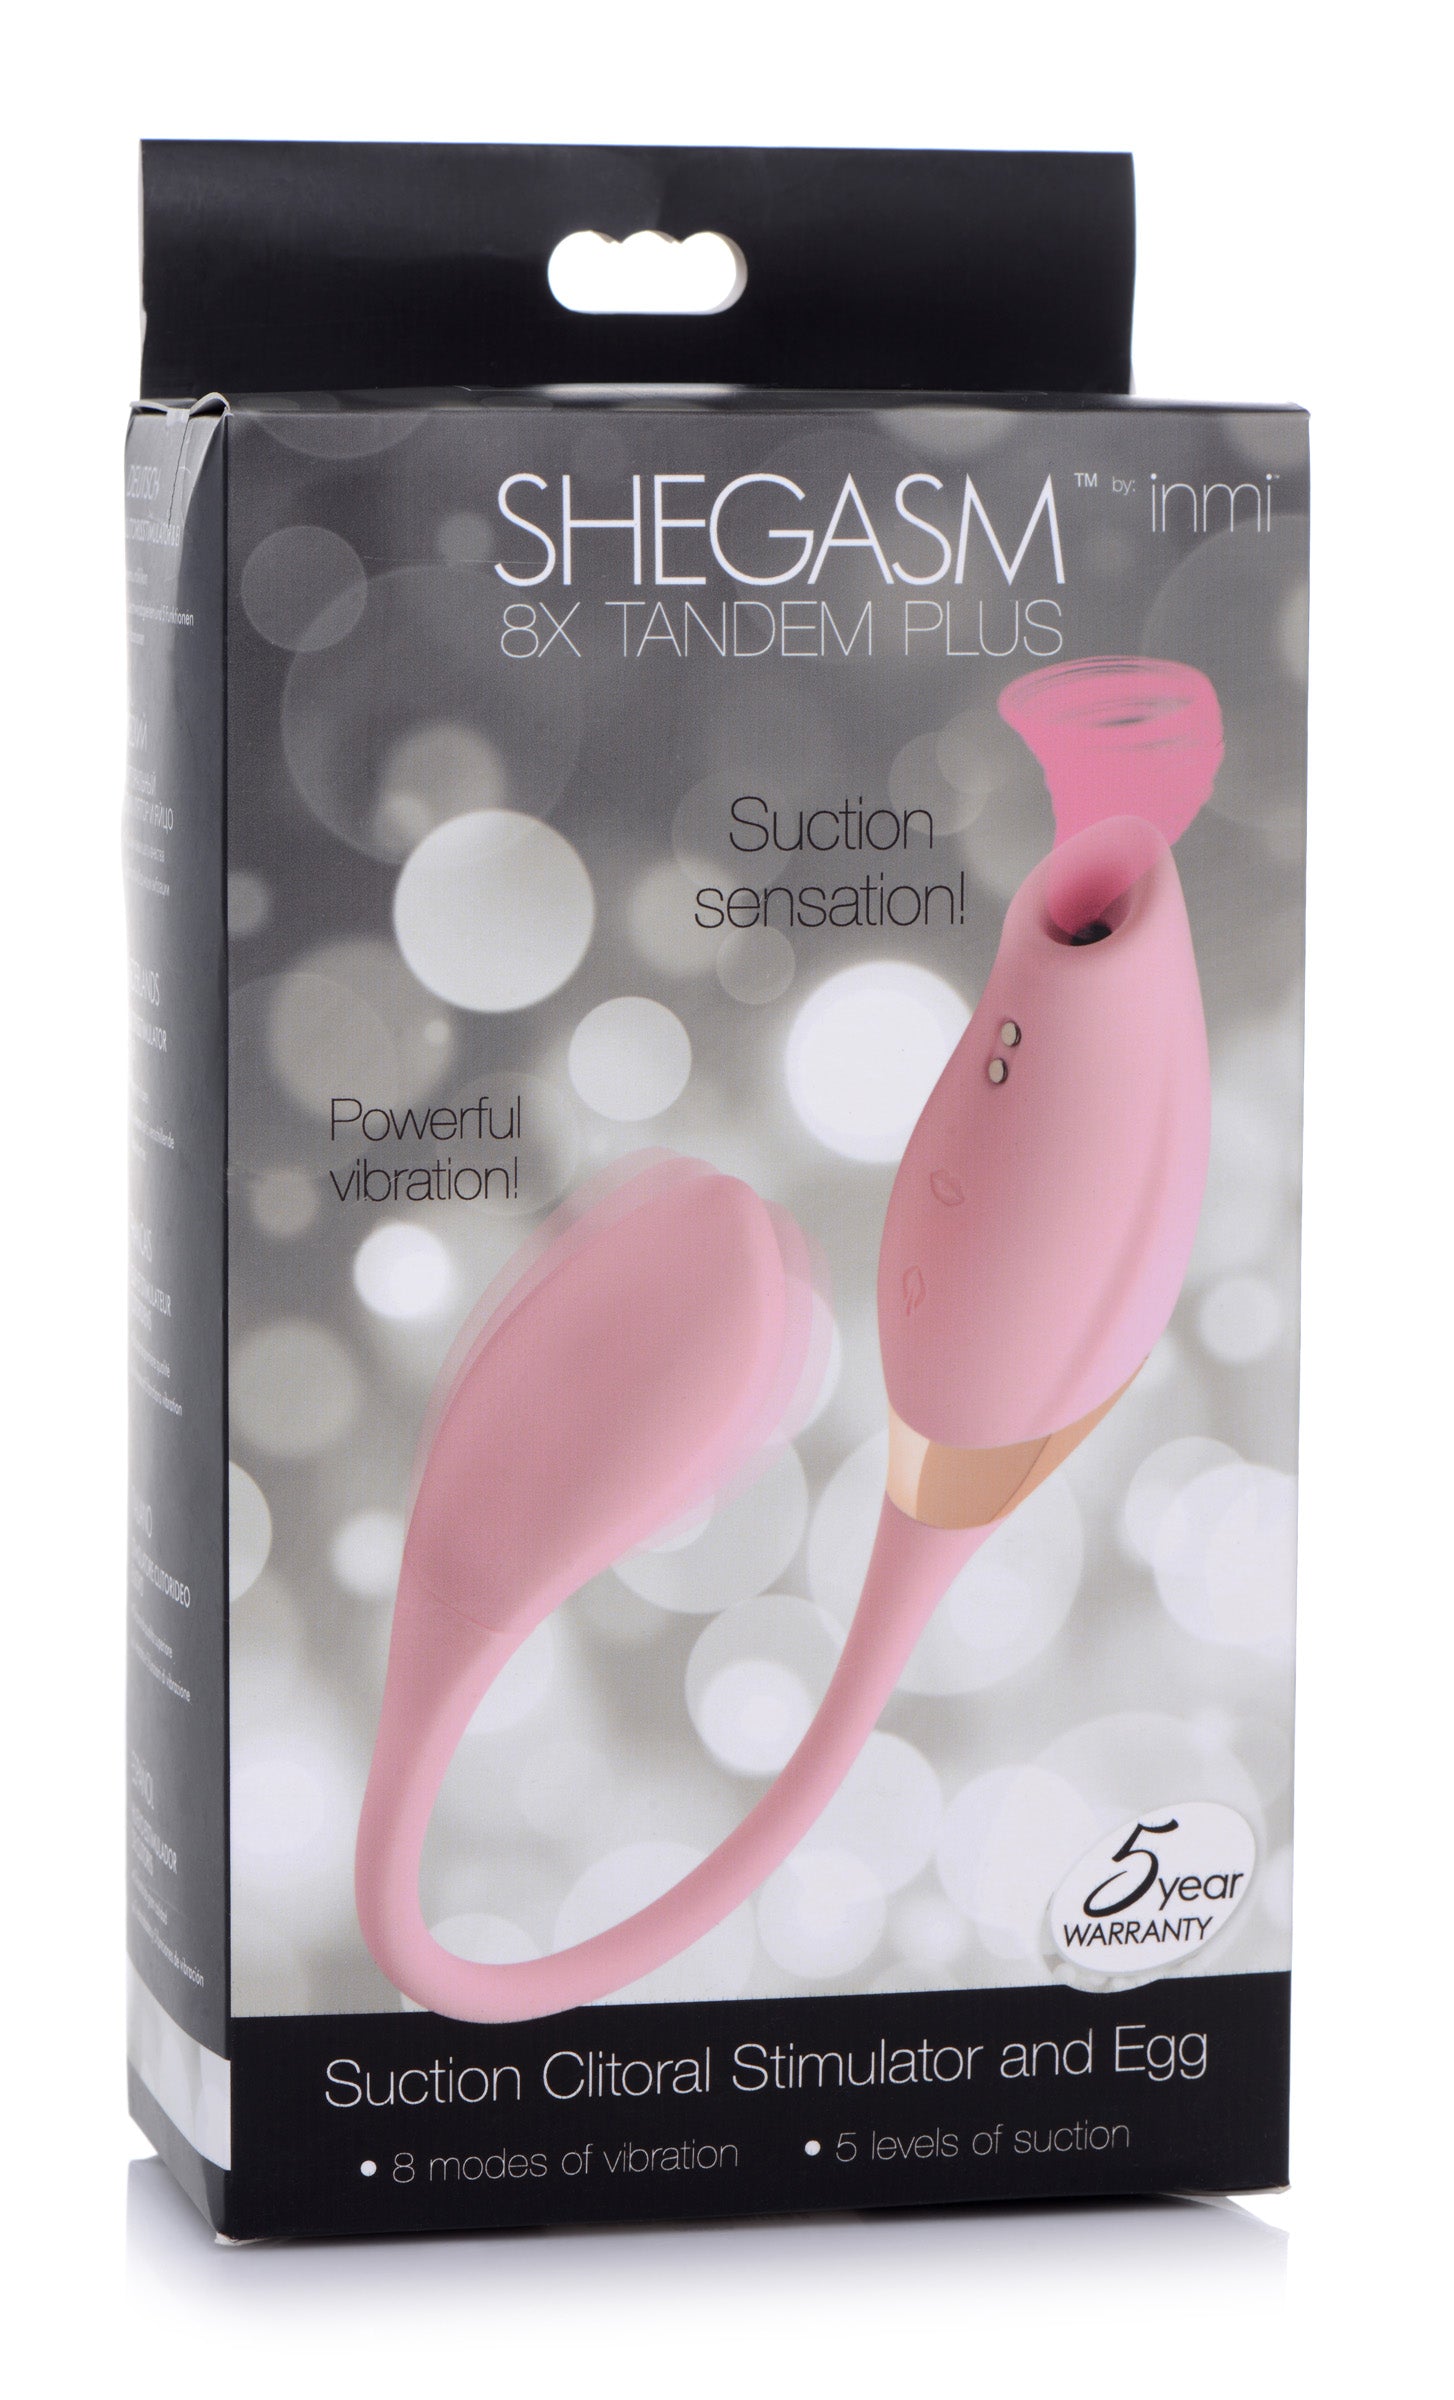 Shegasm 8X Tandem Plus Silicone Suction Clitoral Stimulator and Egg